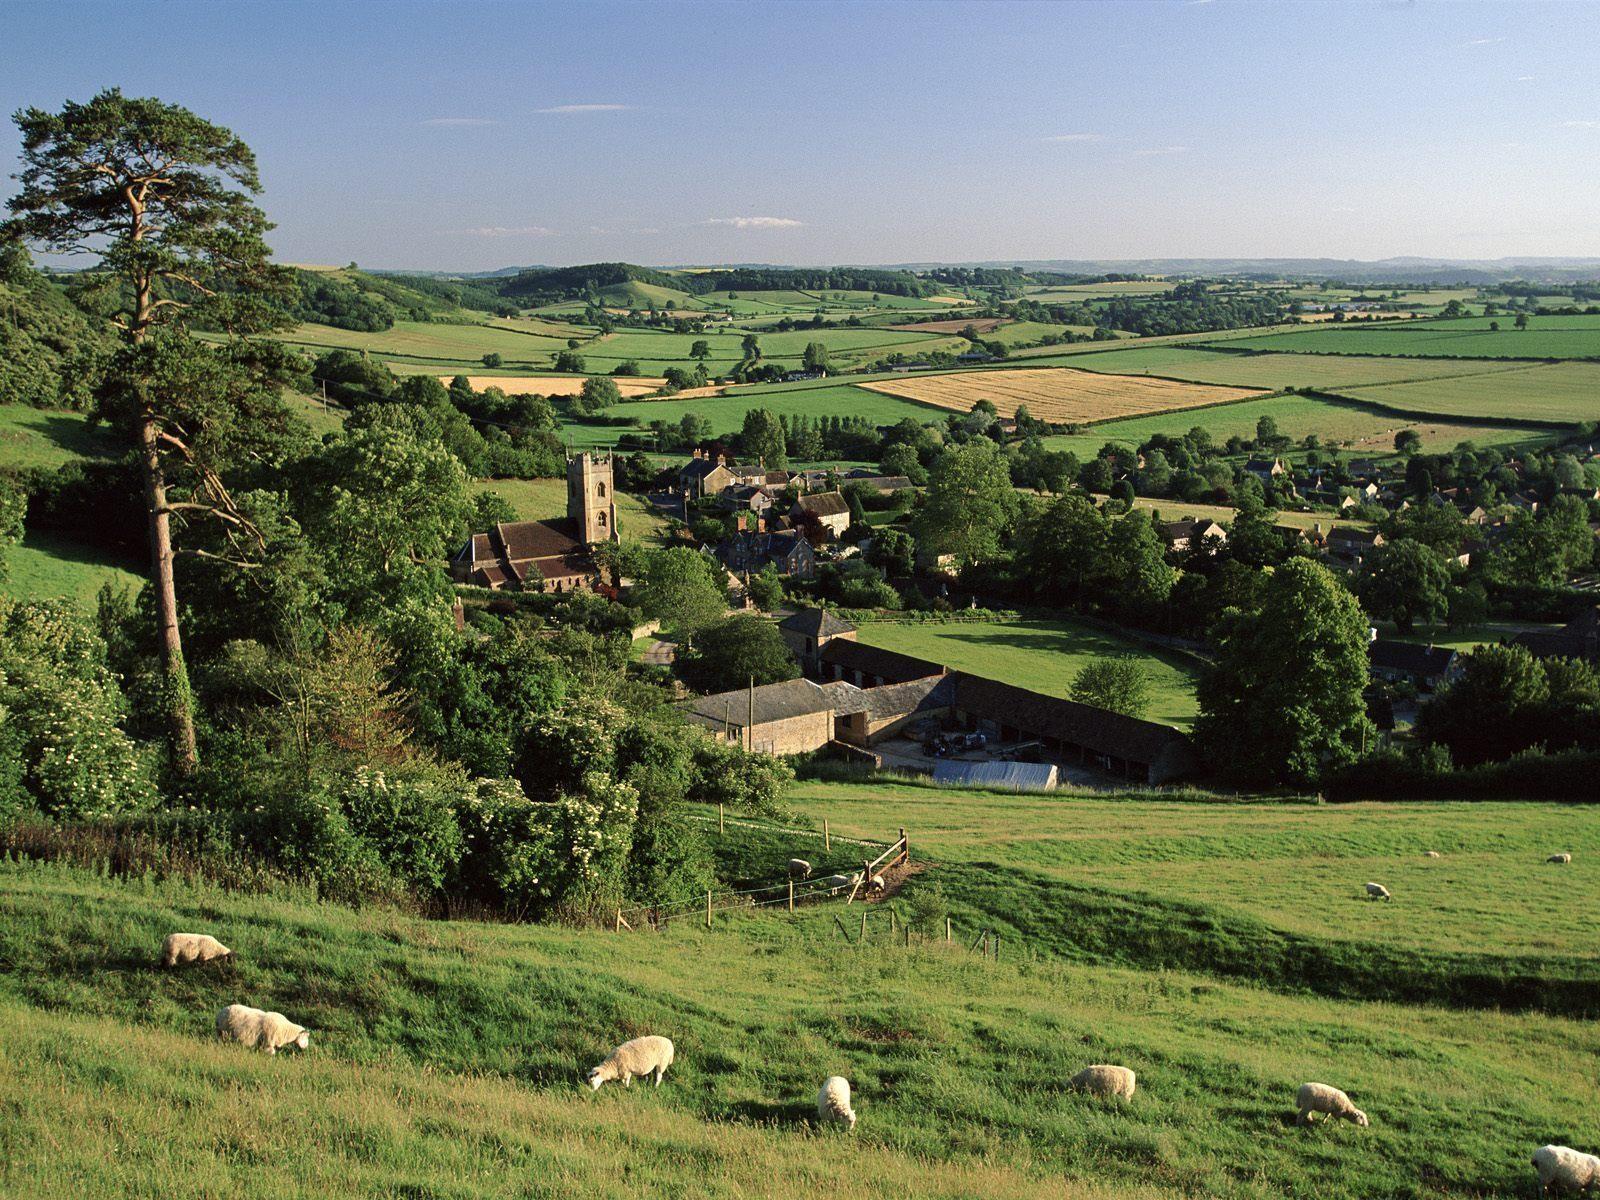 Corton Denham Village, Somerset, England. English countryside